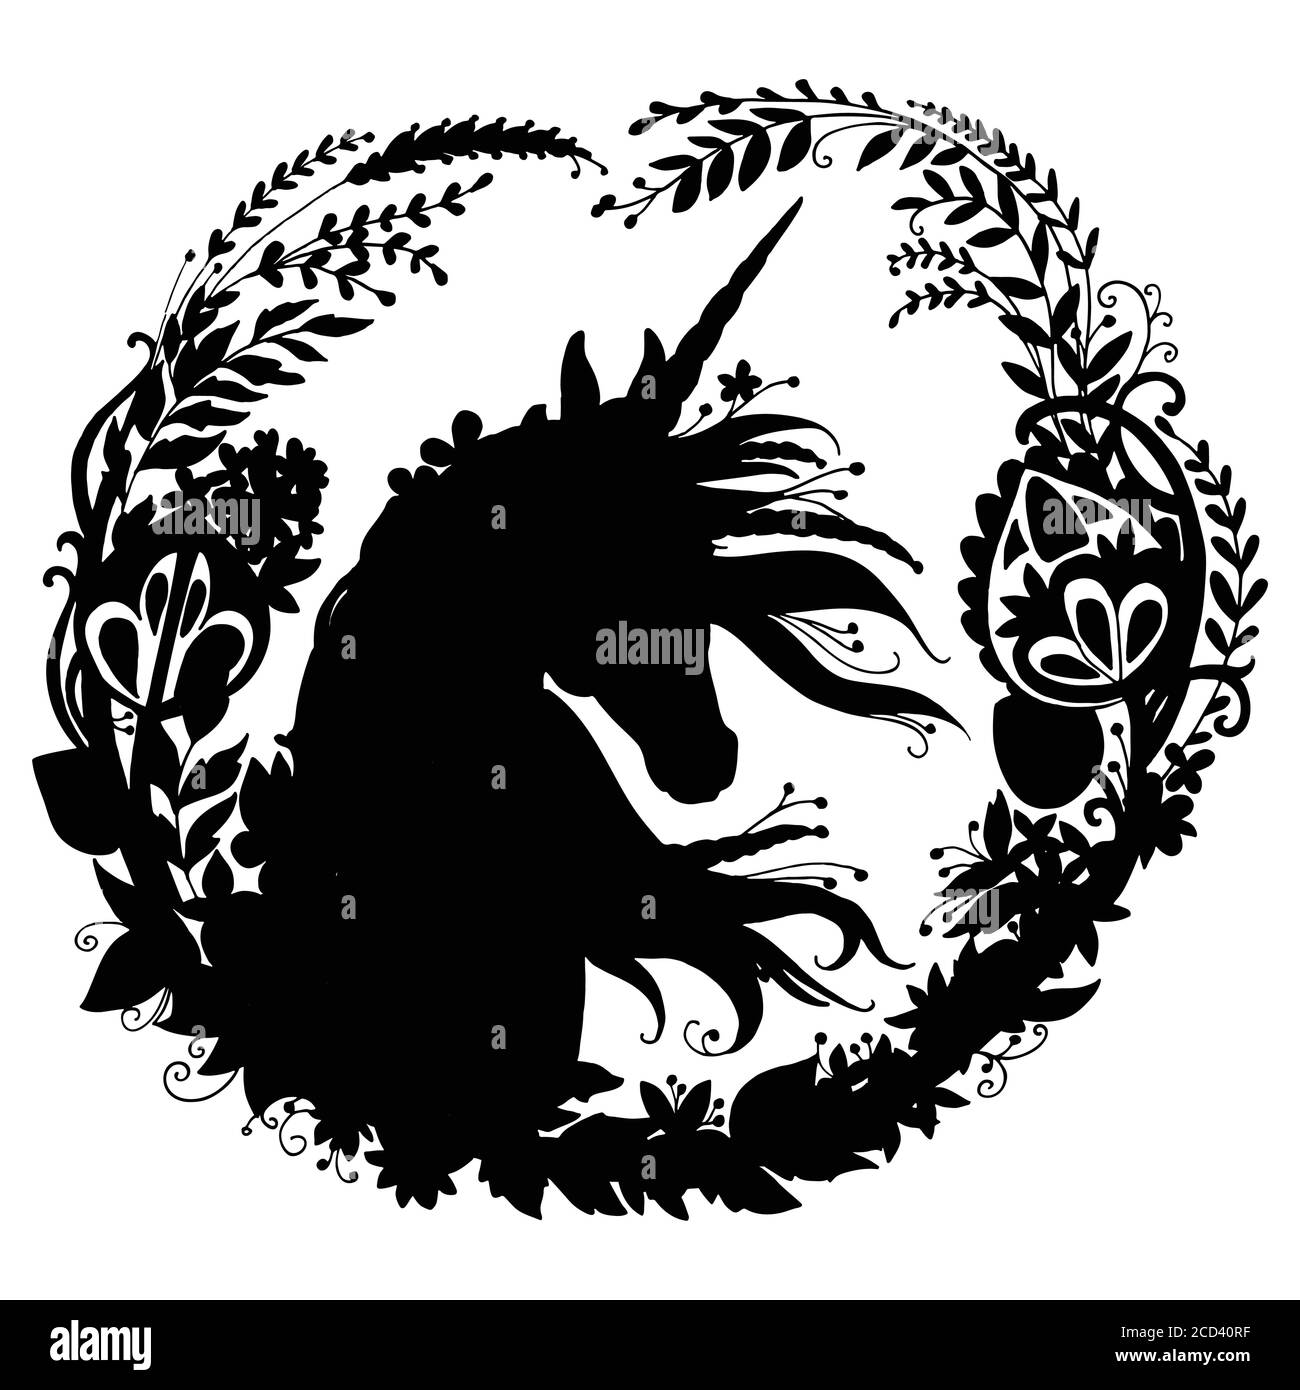 Vector unicornio con mane largo en composición circular. Ilustración de plantilla silueta negra aislada sobre fondo blanco. Para impresión, pegatinas, diseño, Ilustración del Vector